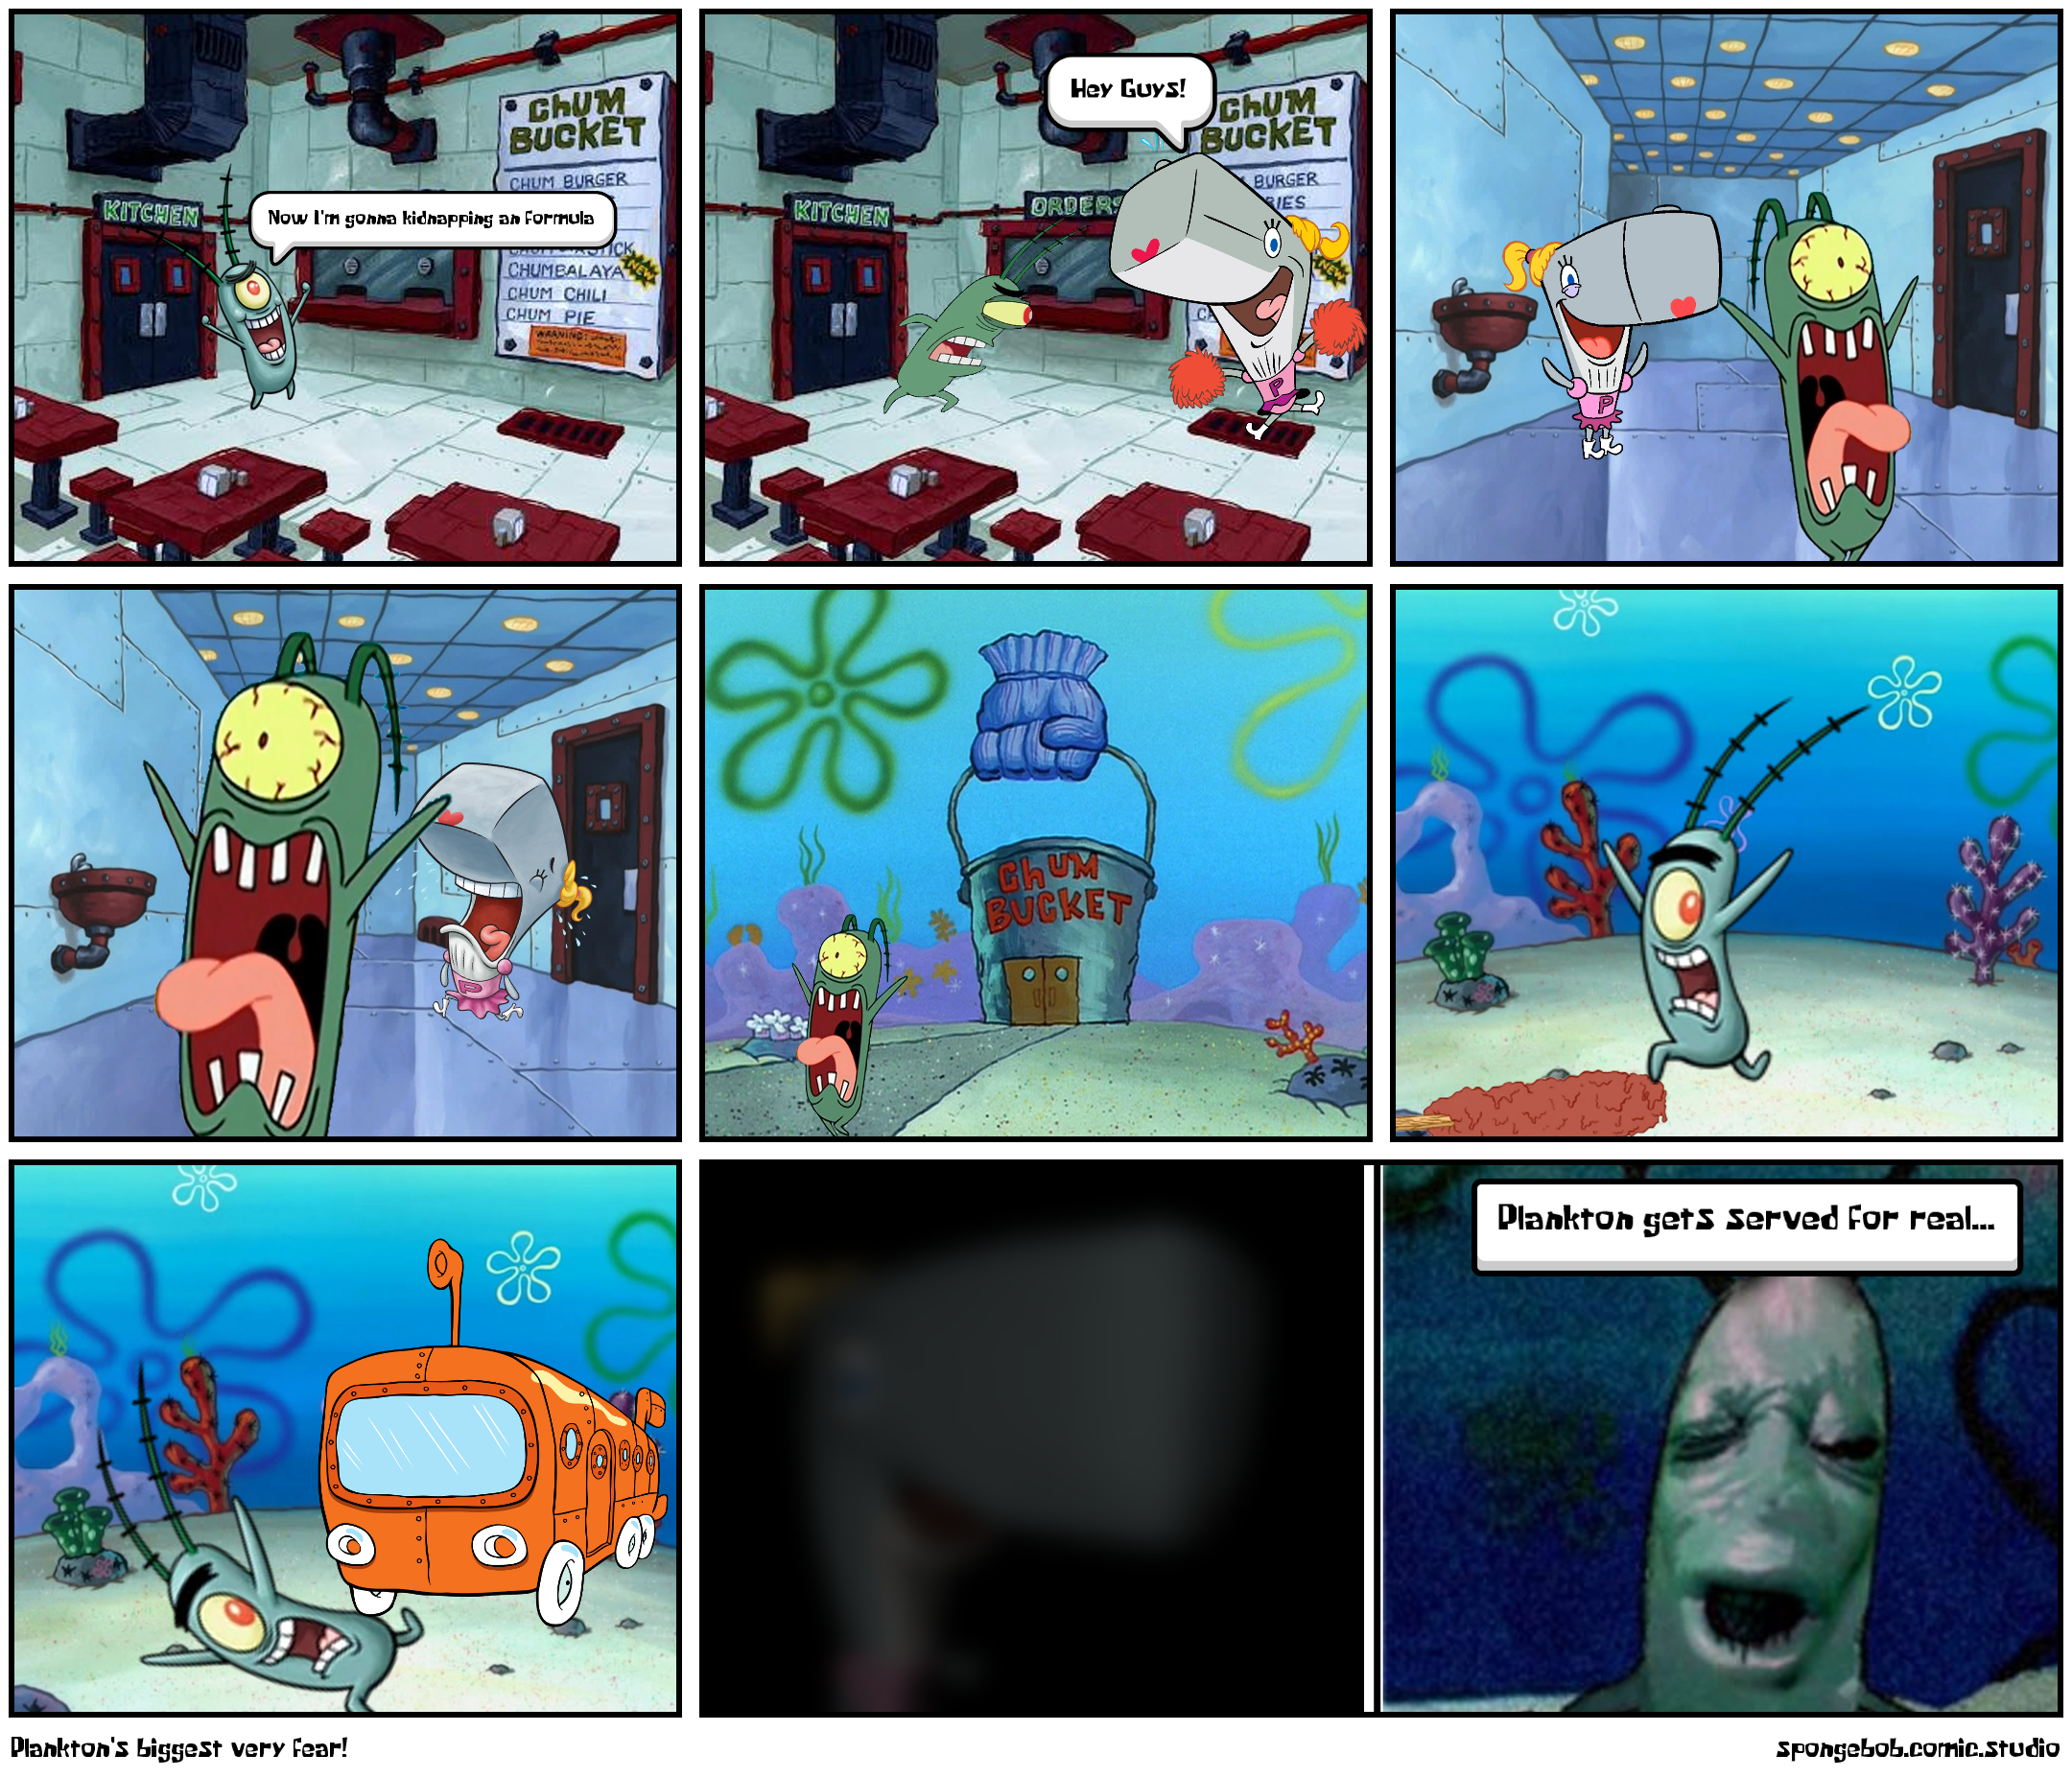 Plankton's biggest very fear!